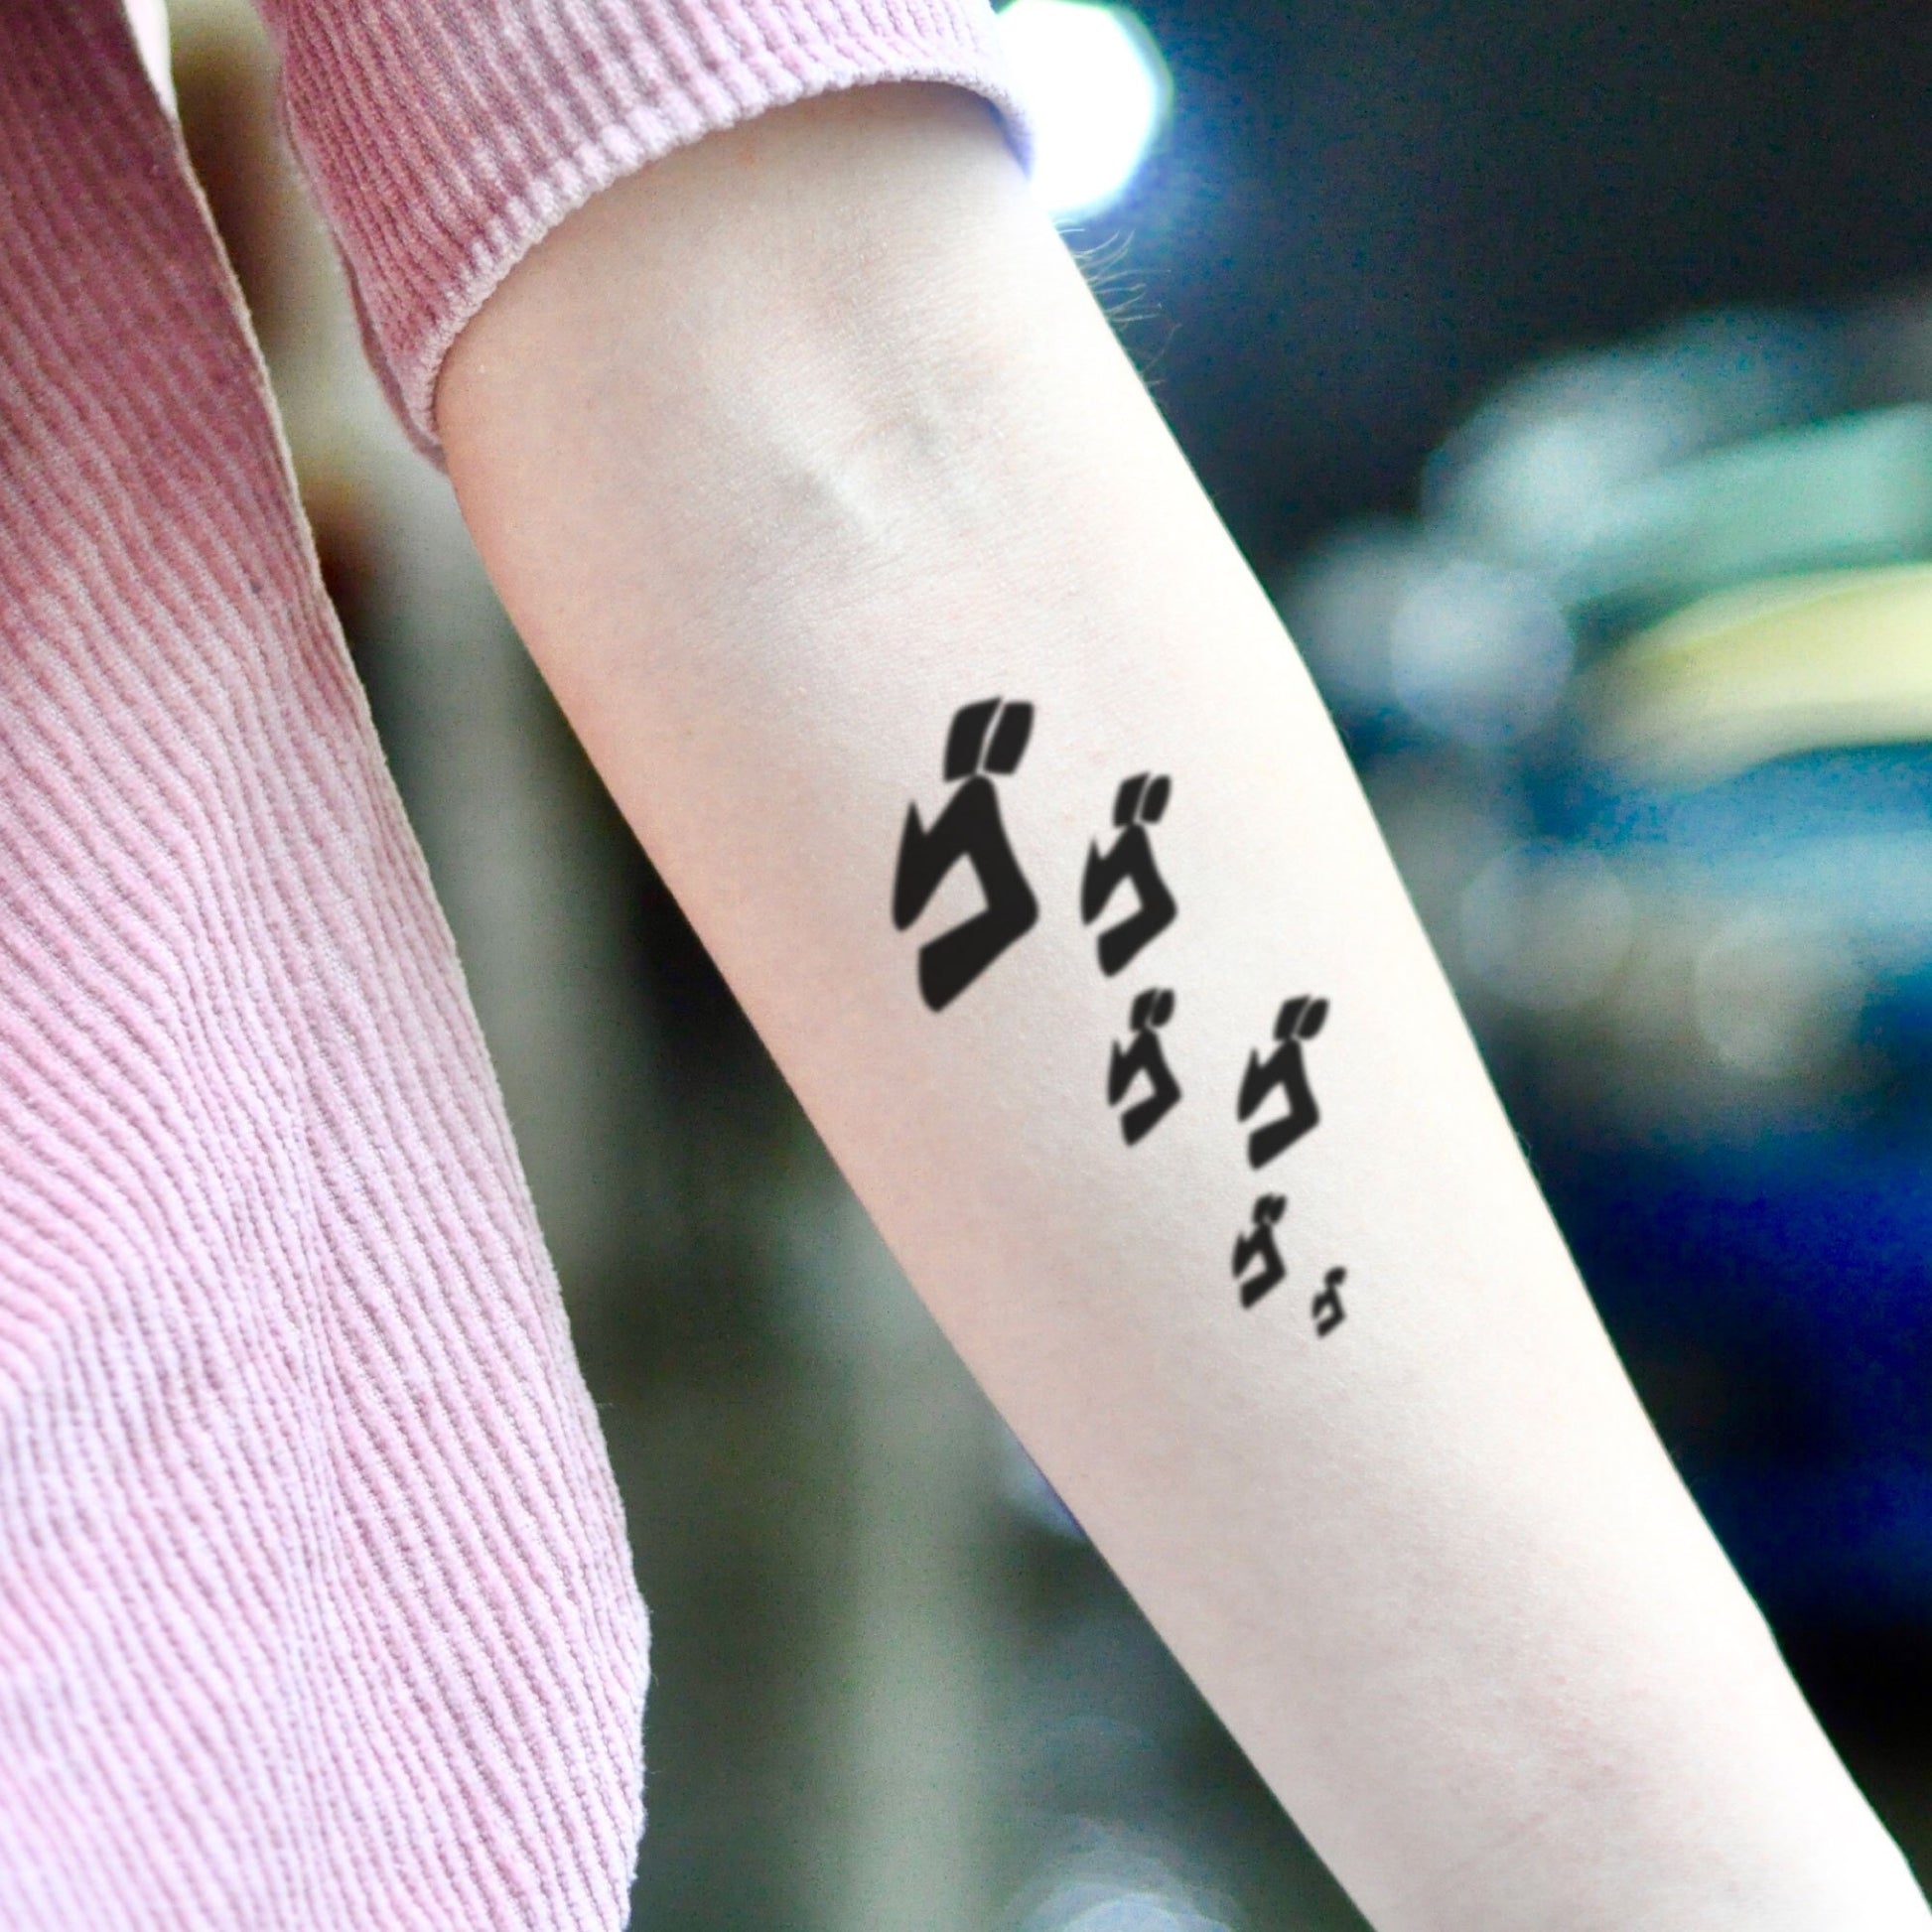 fake small jjba menacing ゴゴゴ jojo's bizarre adventure minimalist temporary tattoo sticker design idea on inner arm